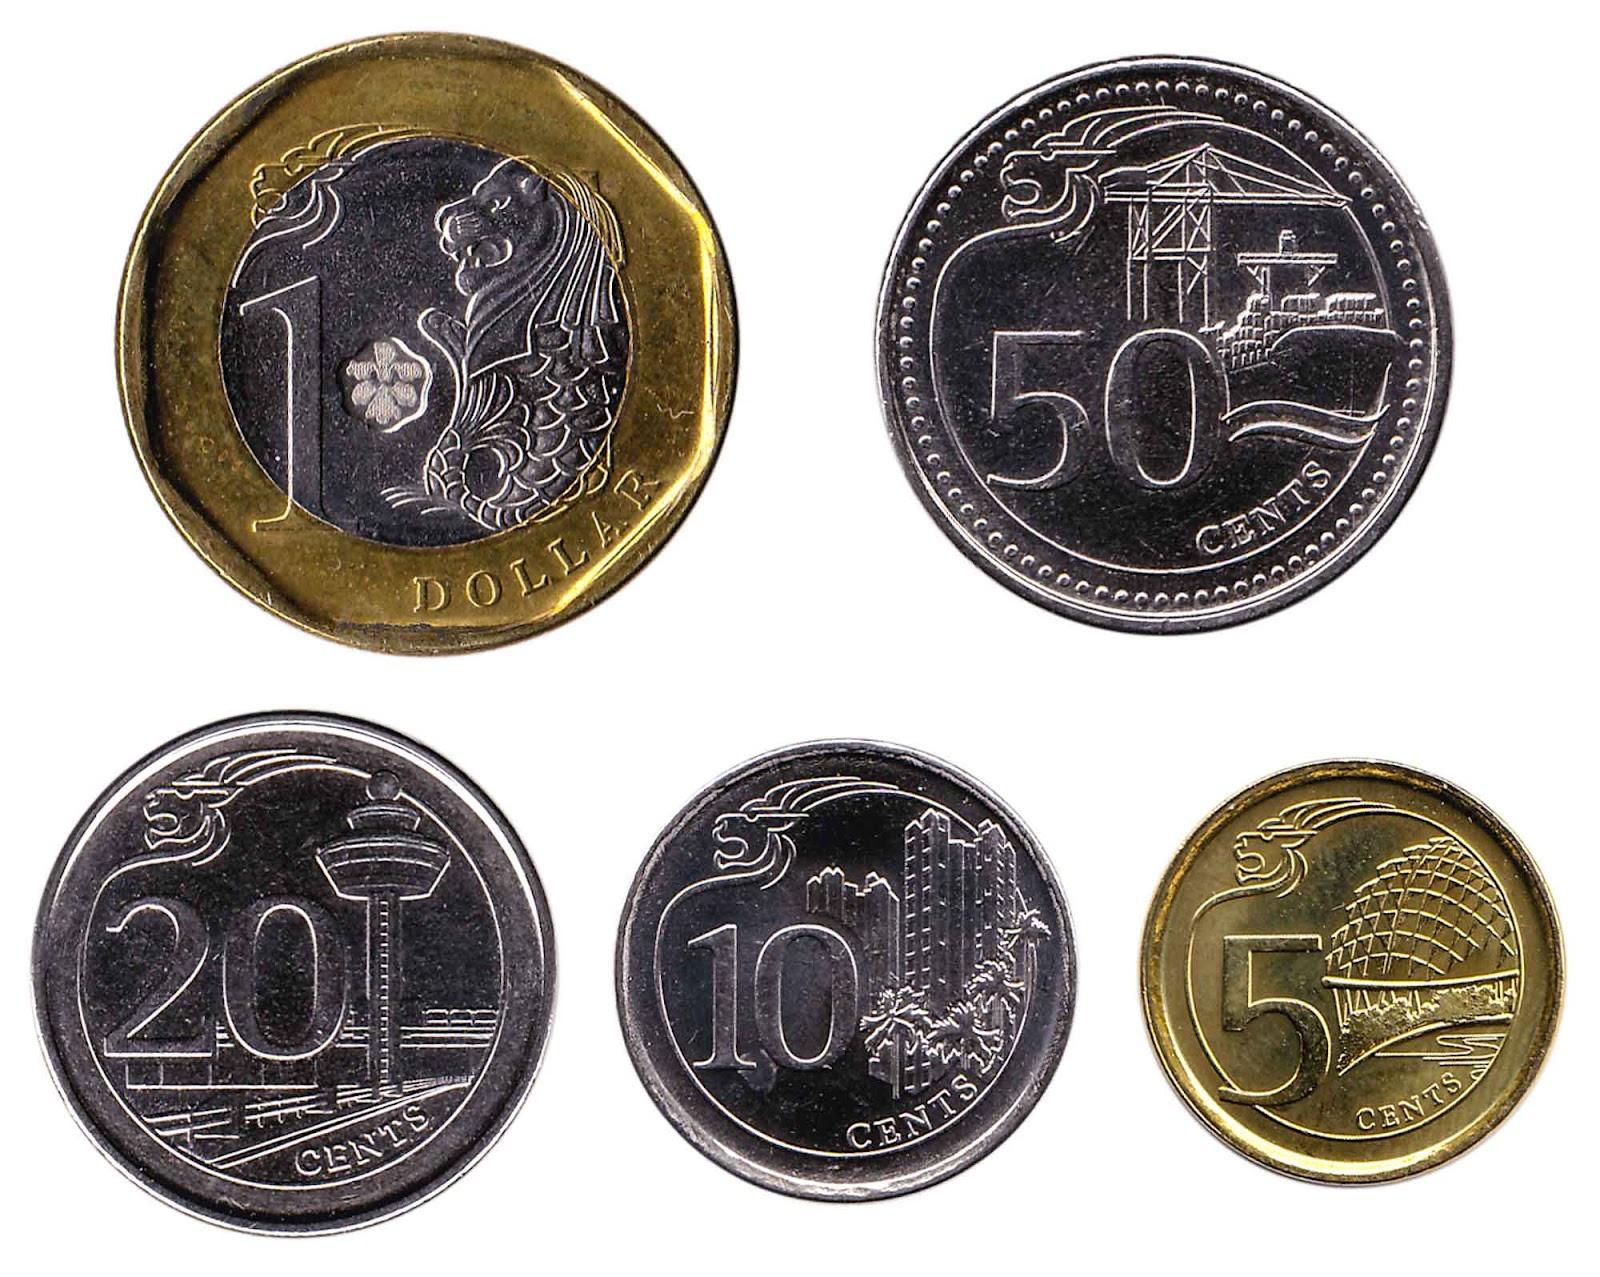 Singapore dollar coin series
